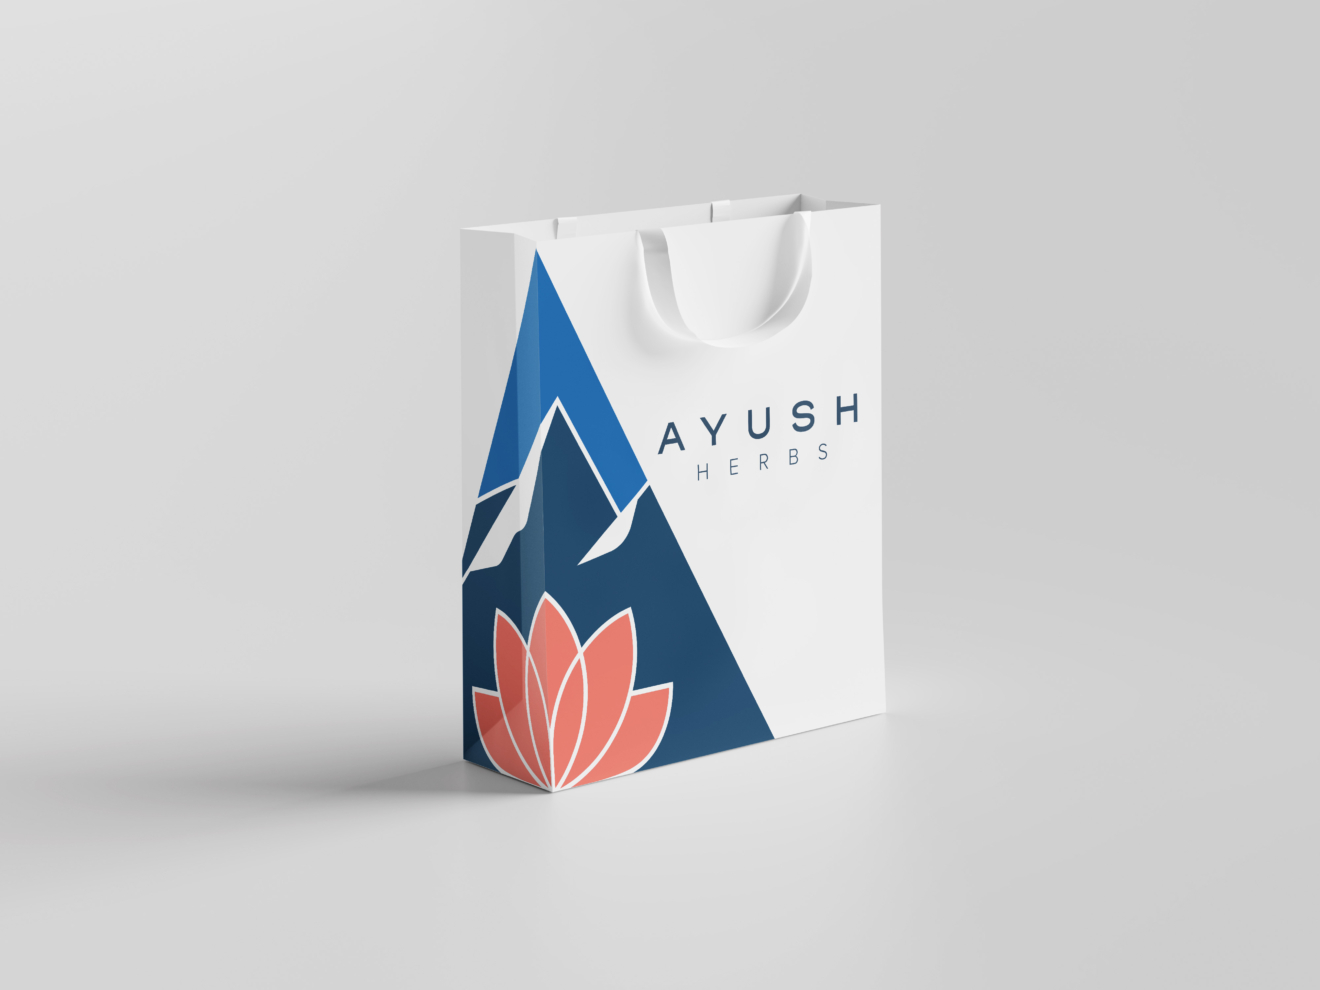 New Ayush Herbs logo on bag mockup